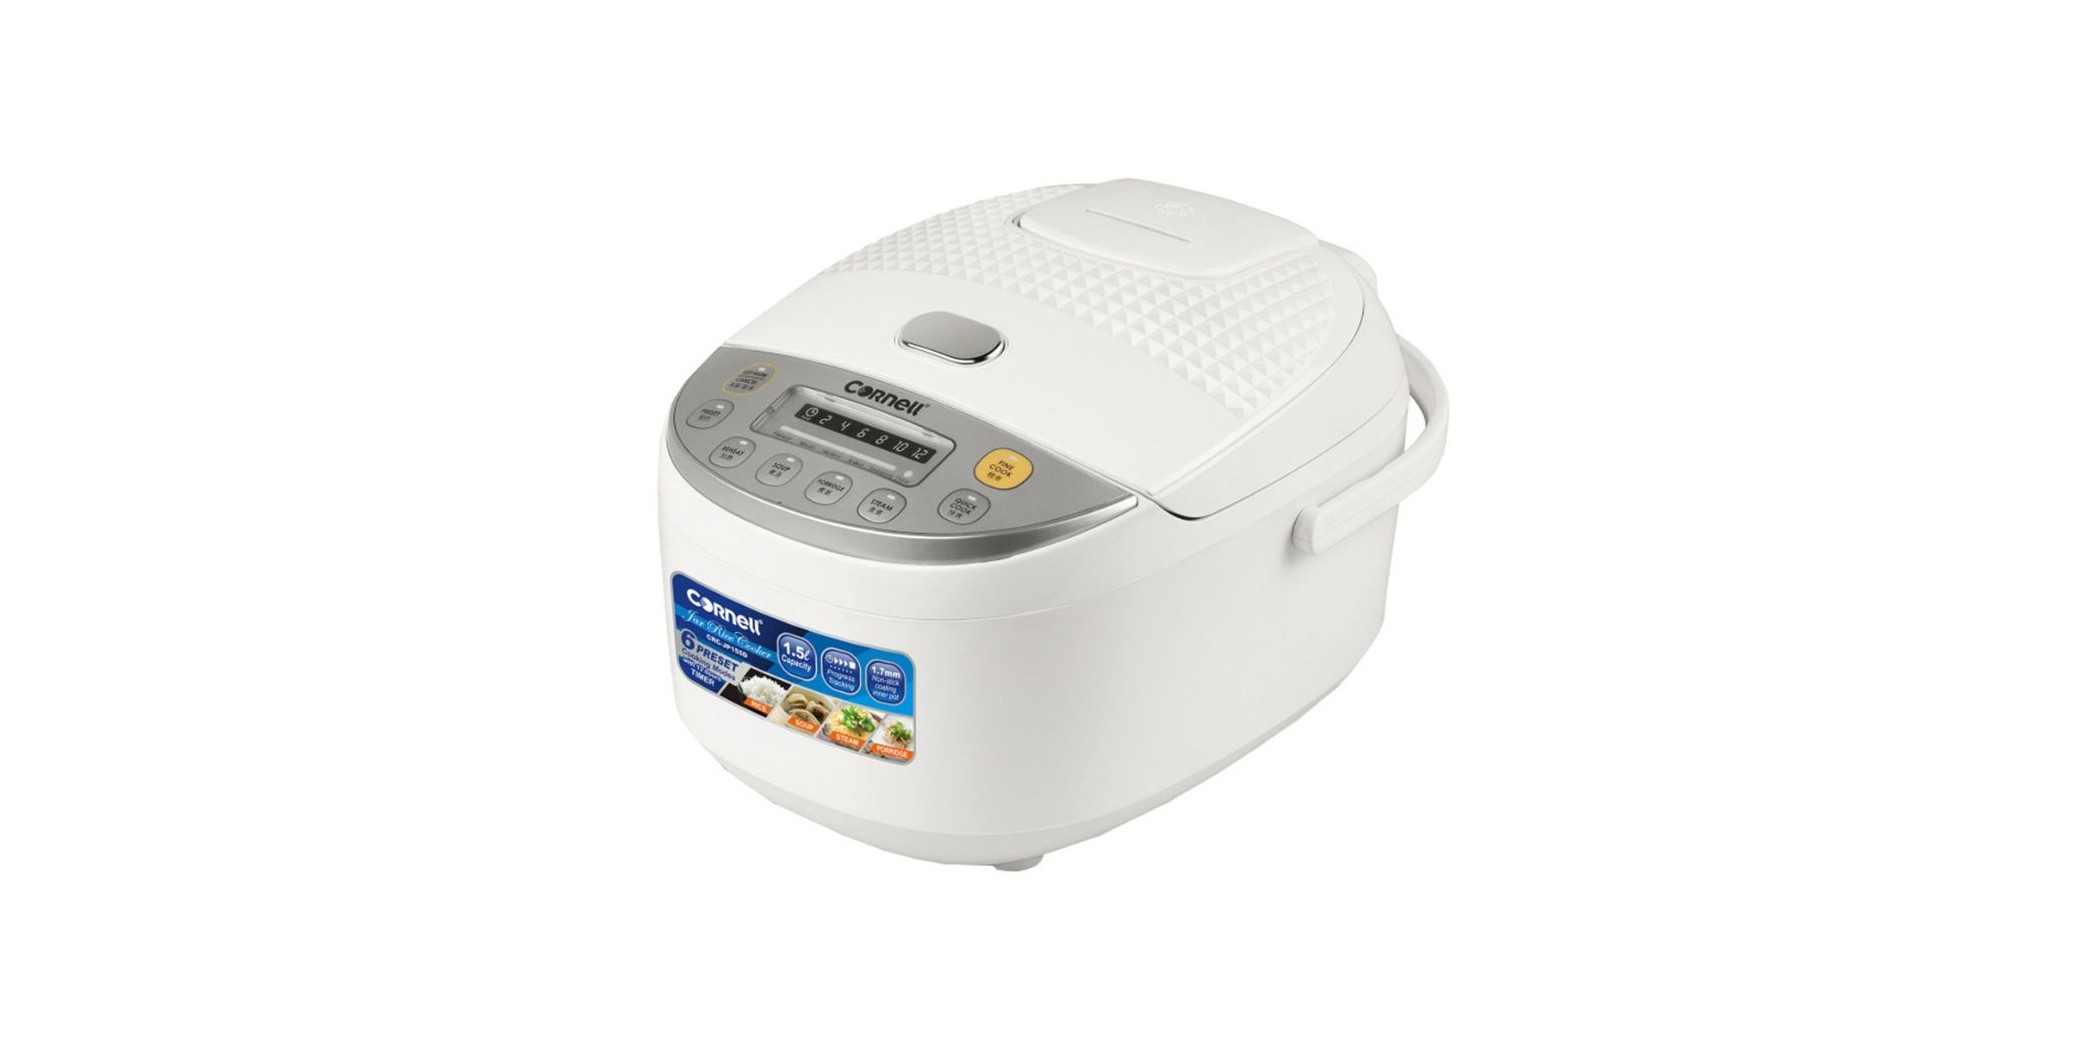 Cornell CRC-JP155D 1.5L WH Digital Rice Cooker